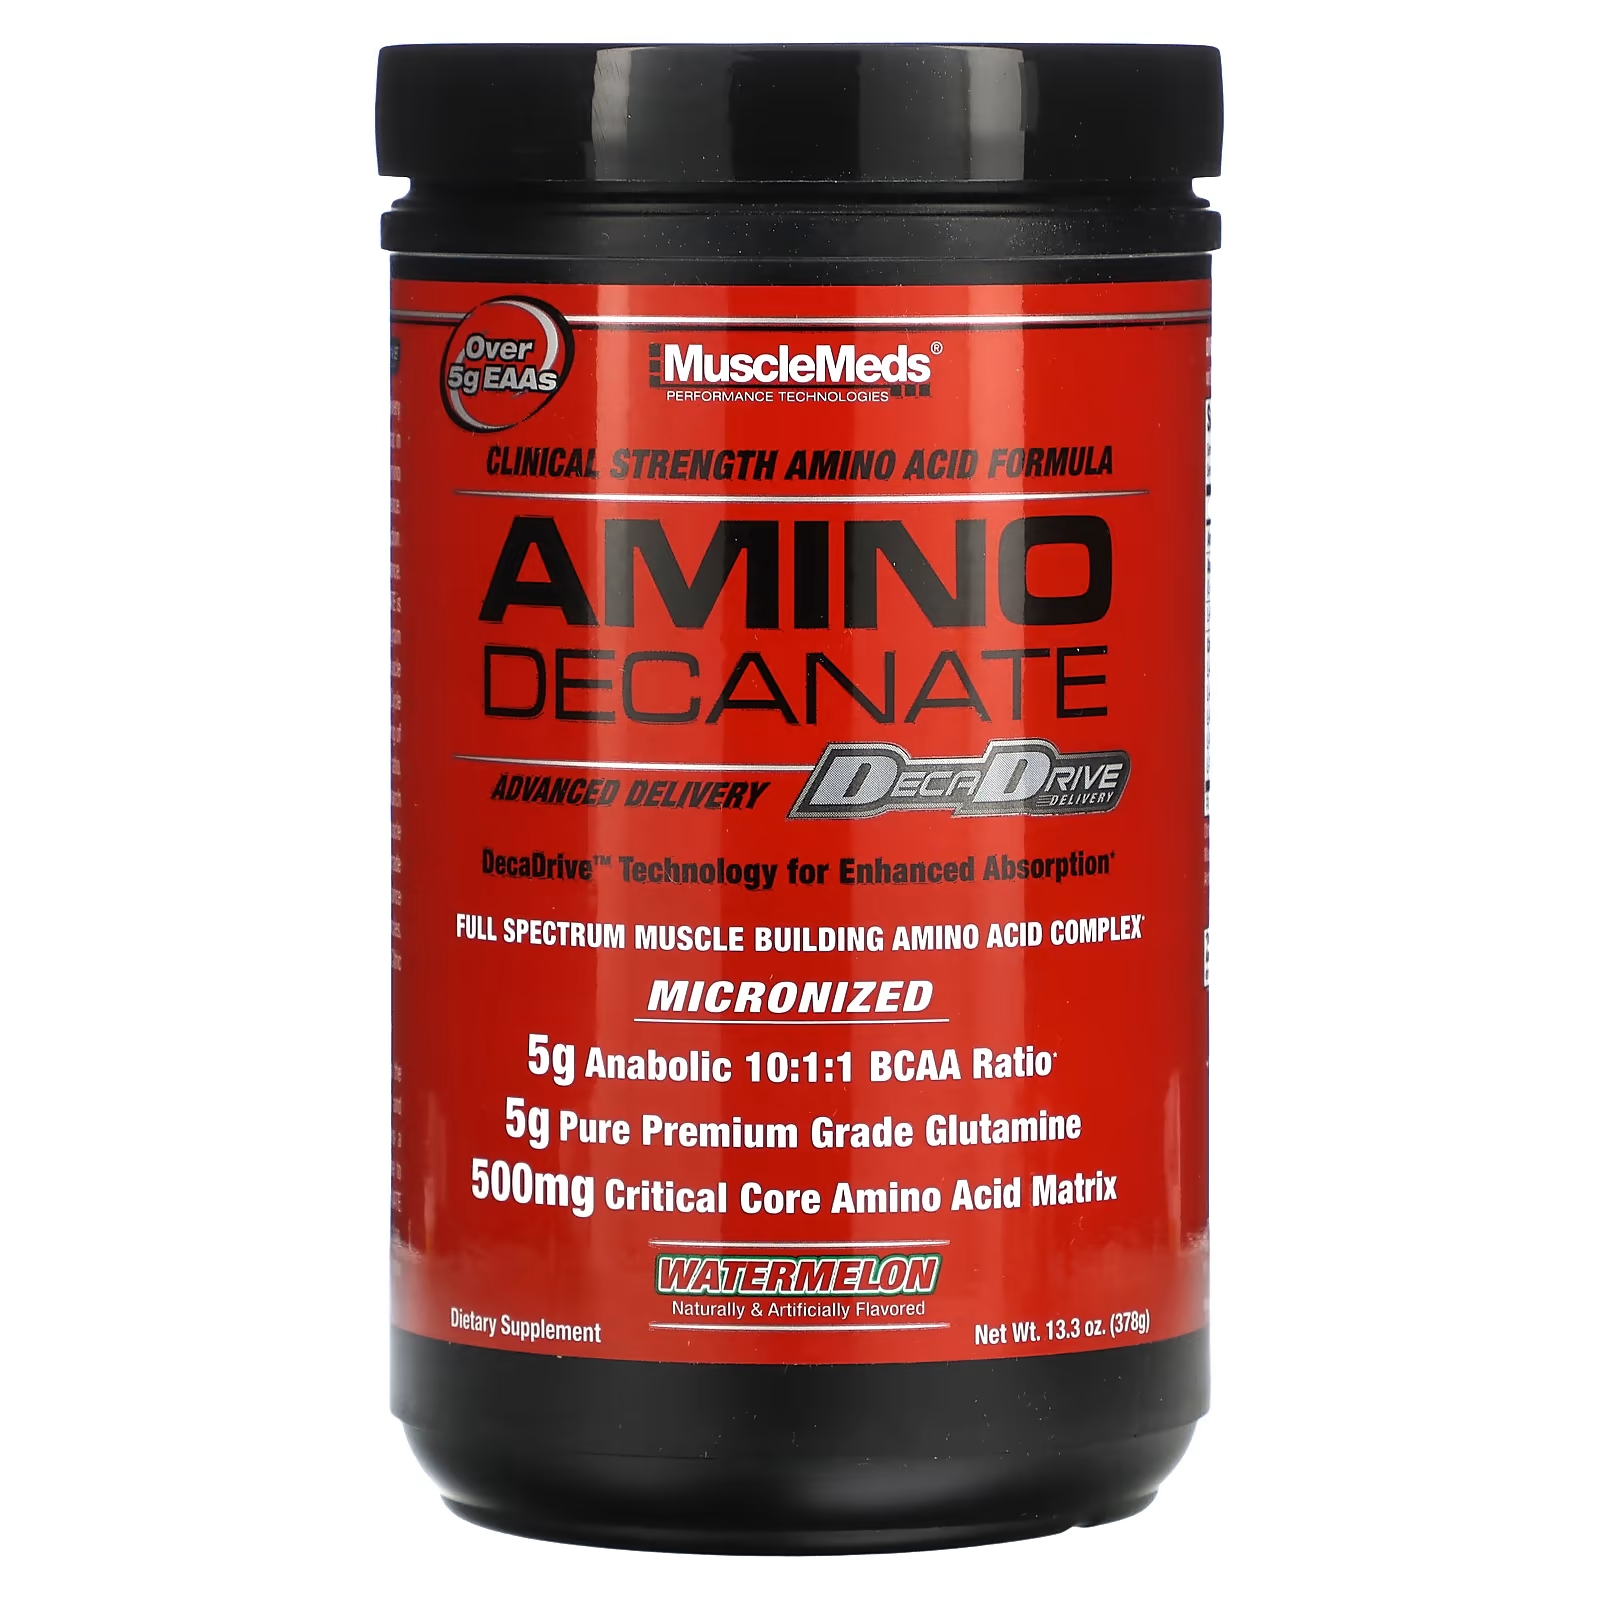 аминокислотный комплекс fuelup amino up 600 mg 240 порций Аминодеканат MuscleMeds, арбуз